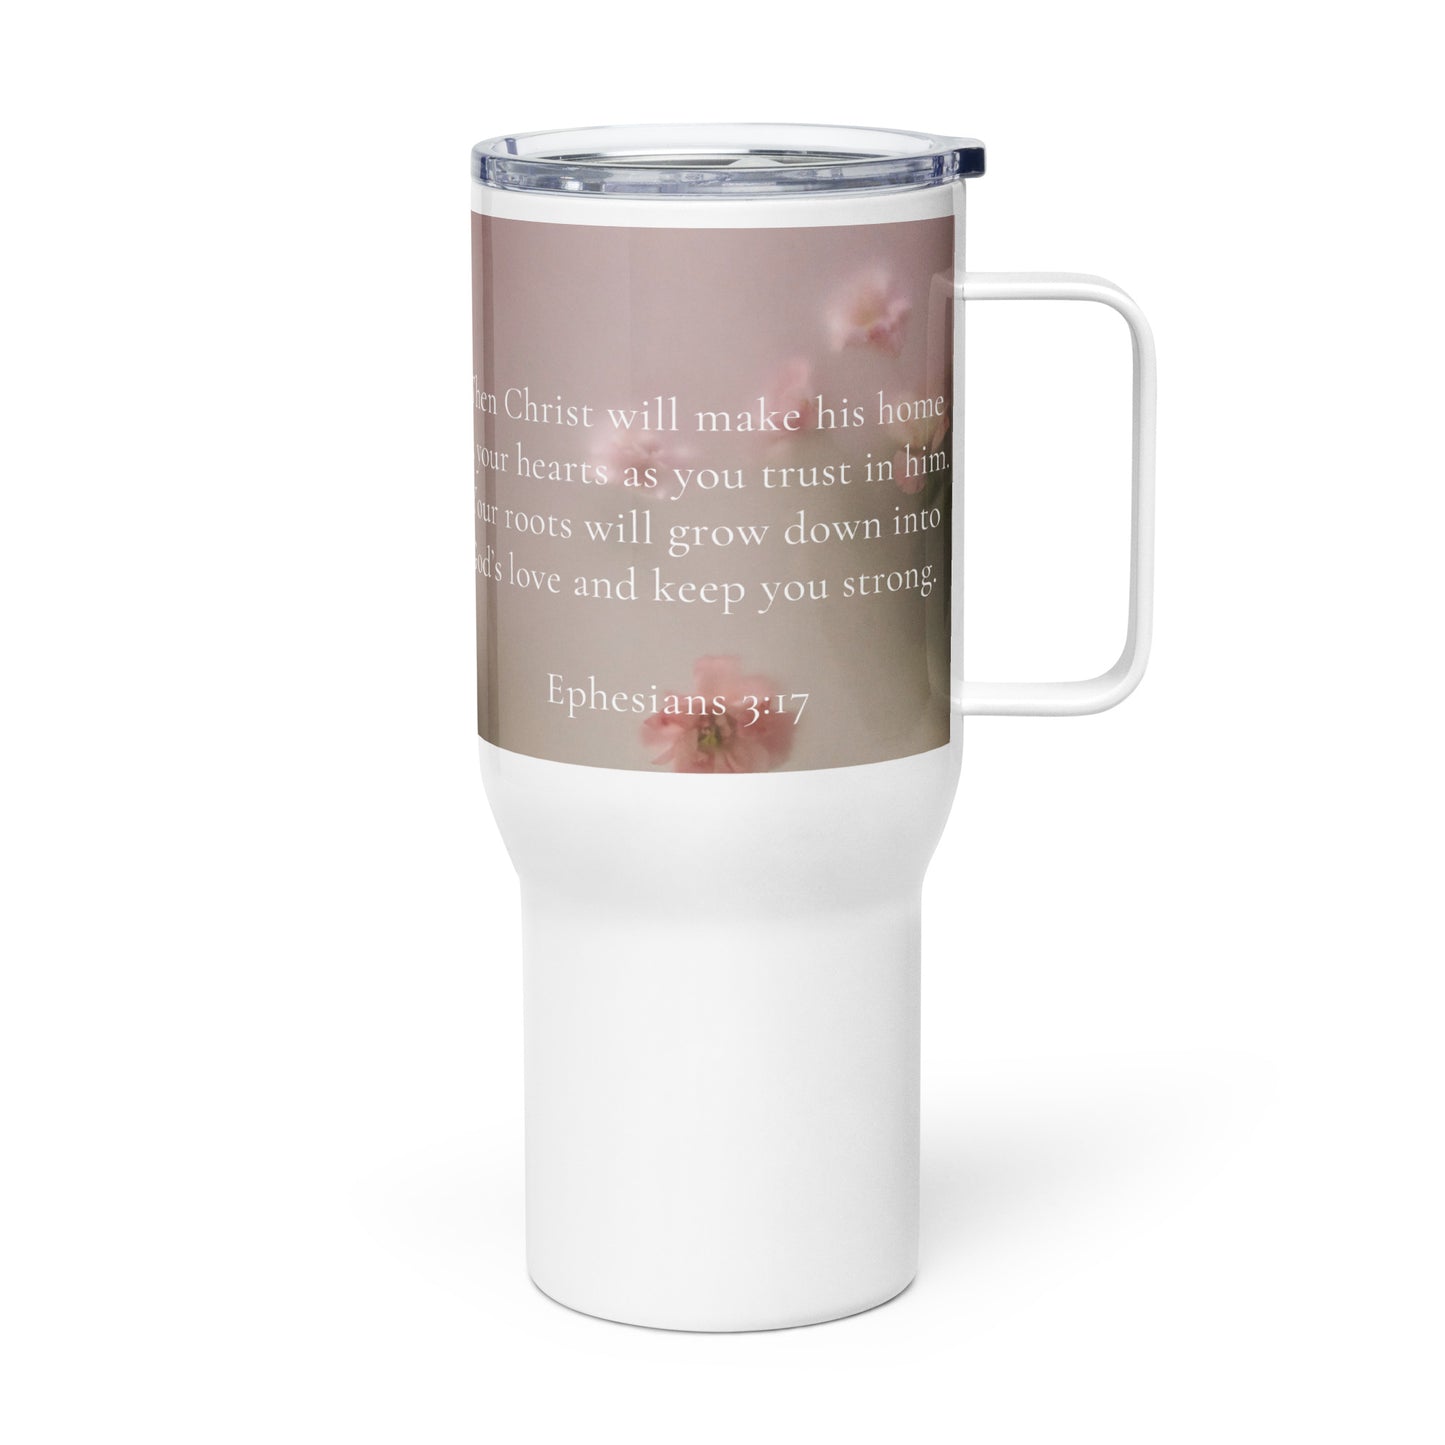 Ephesians 3:17 Travel mug with a handle